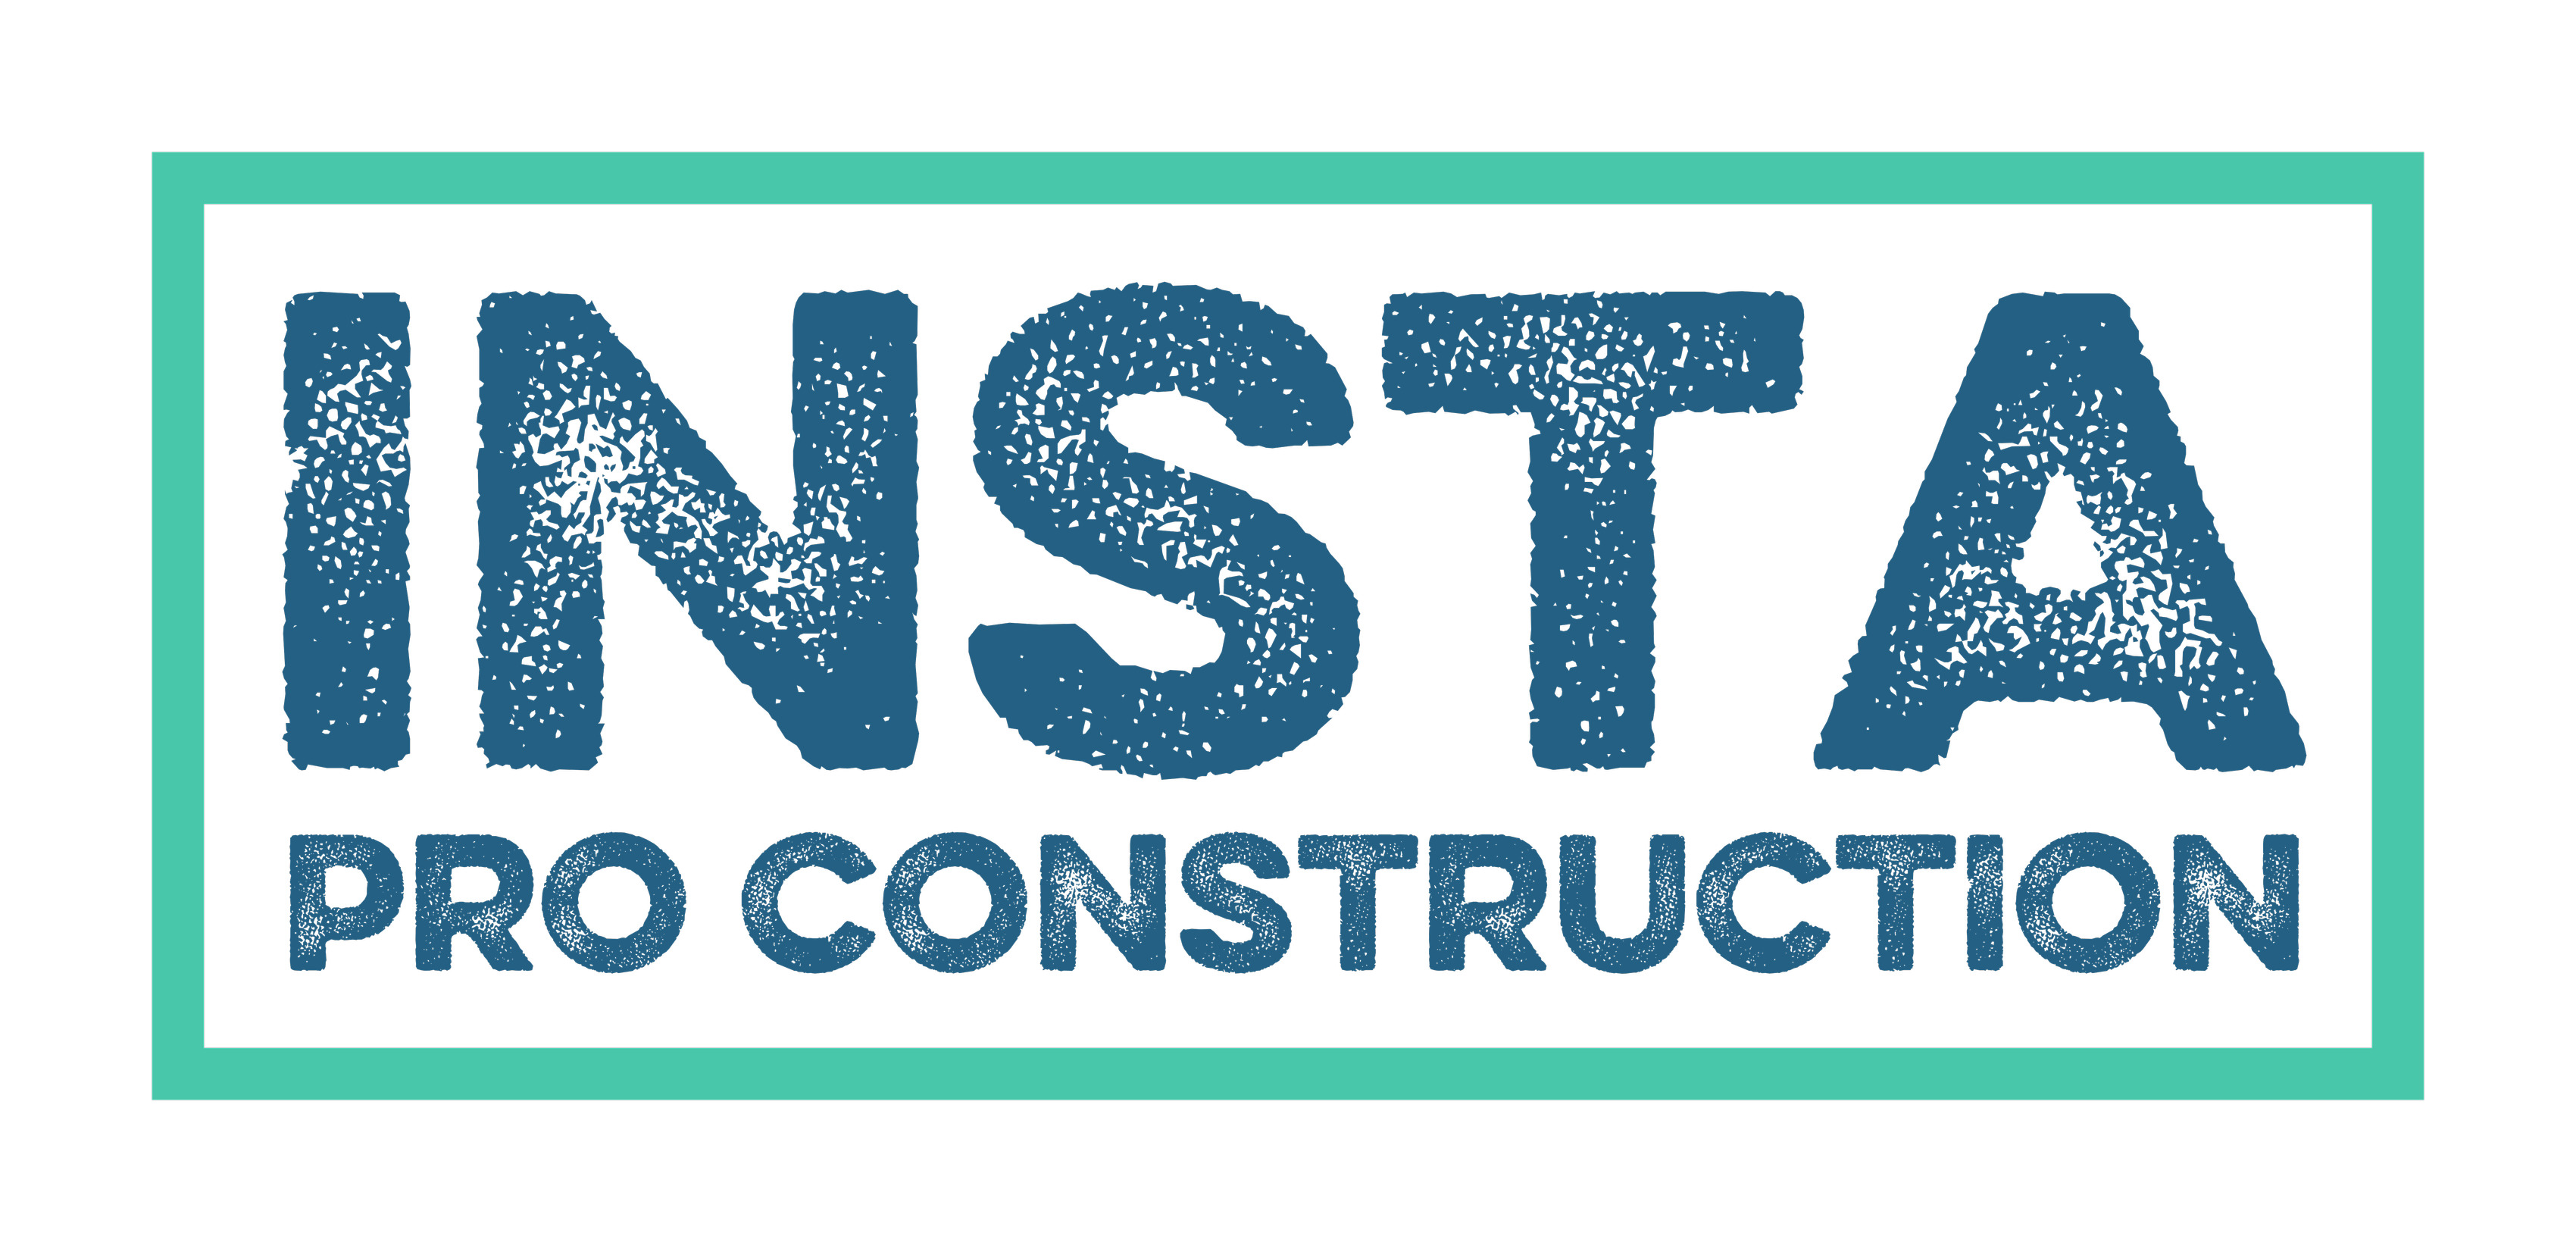 Insta Pro Construction Logo